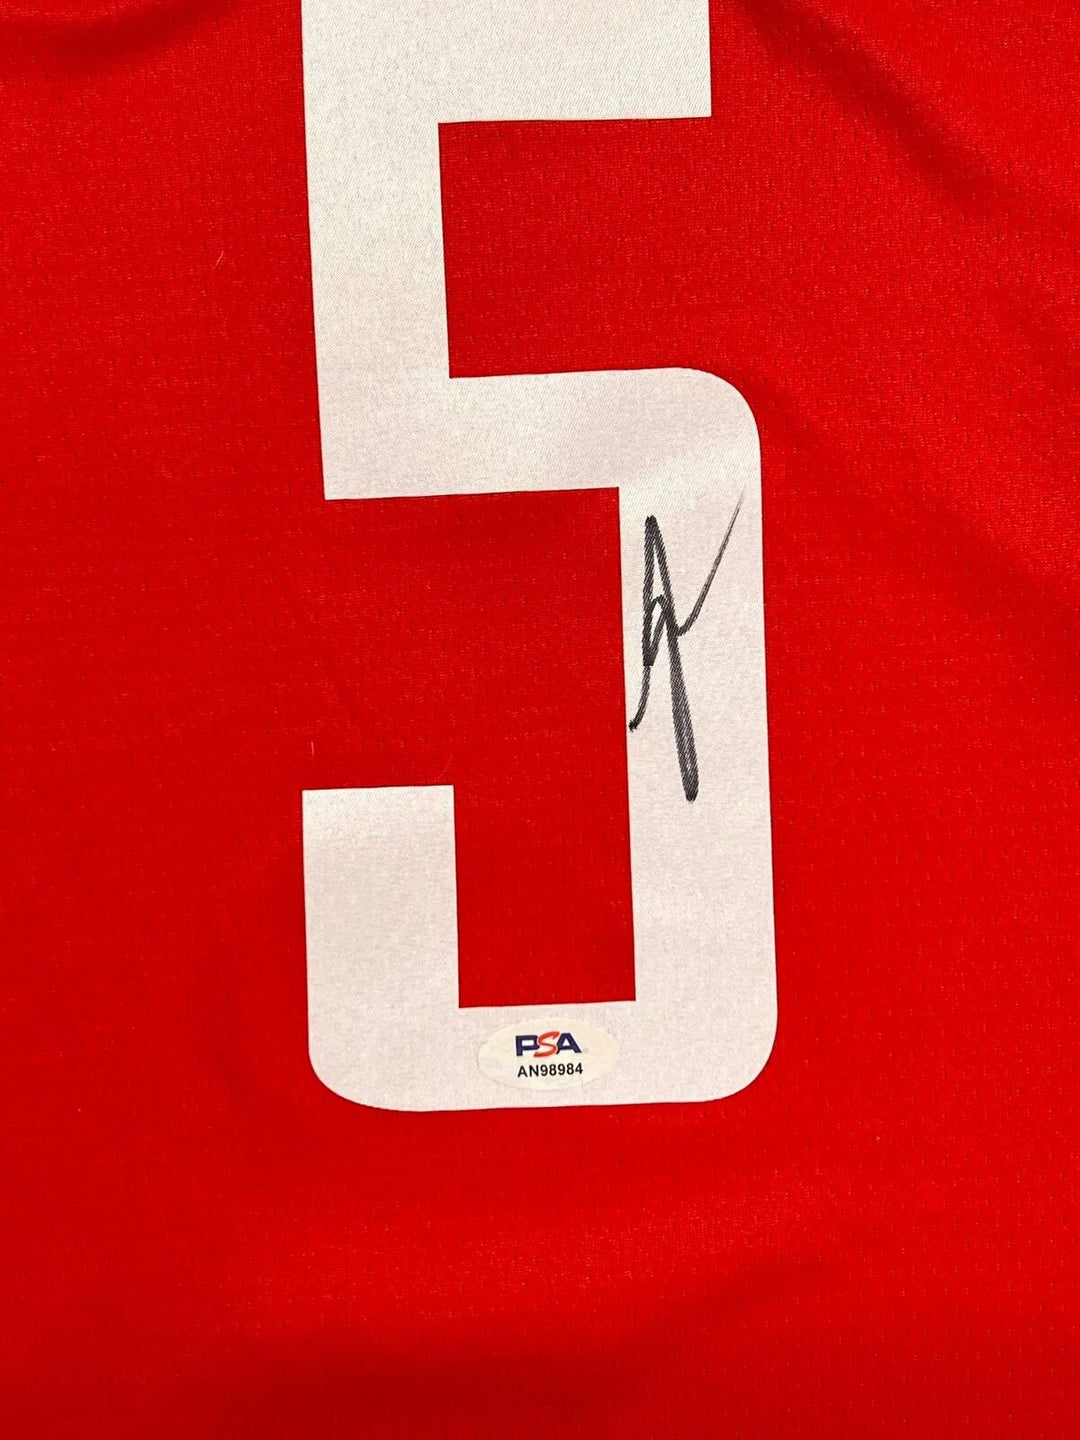 Fred VanVleet Signed Jersey PSA/DNA Houston Rockets Autographed Image 2